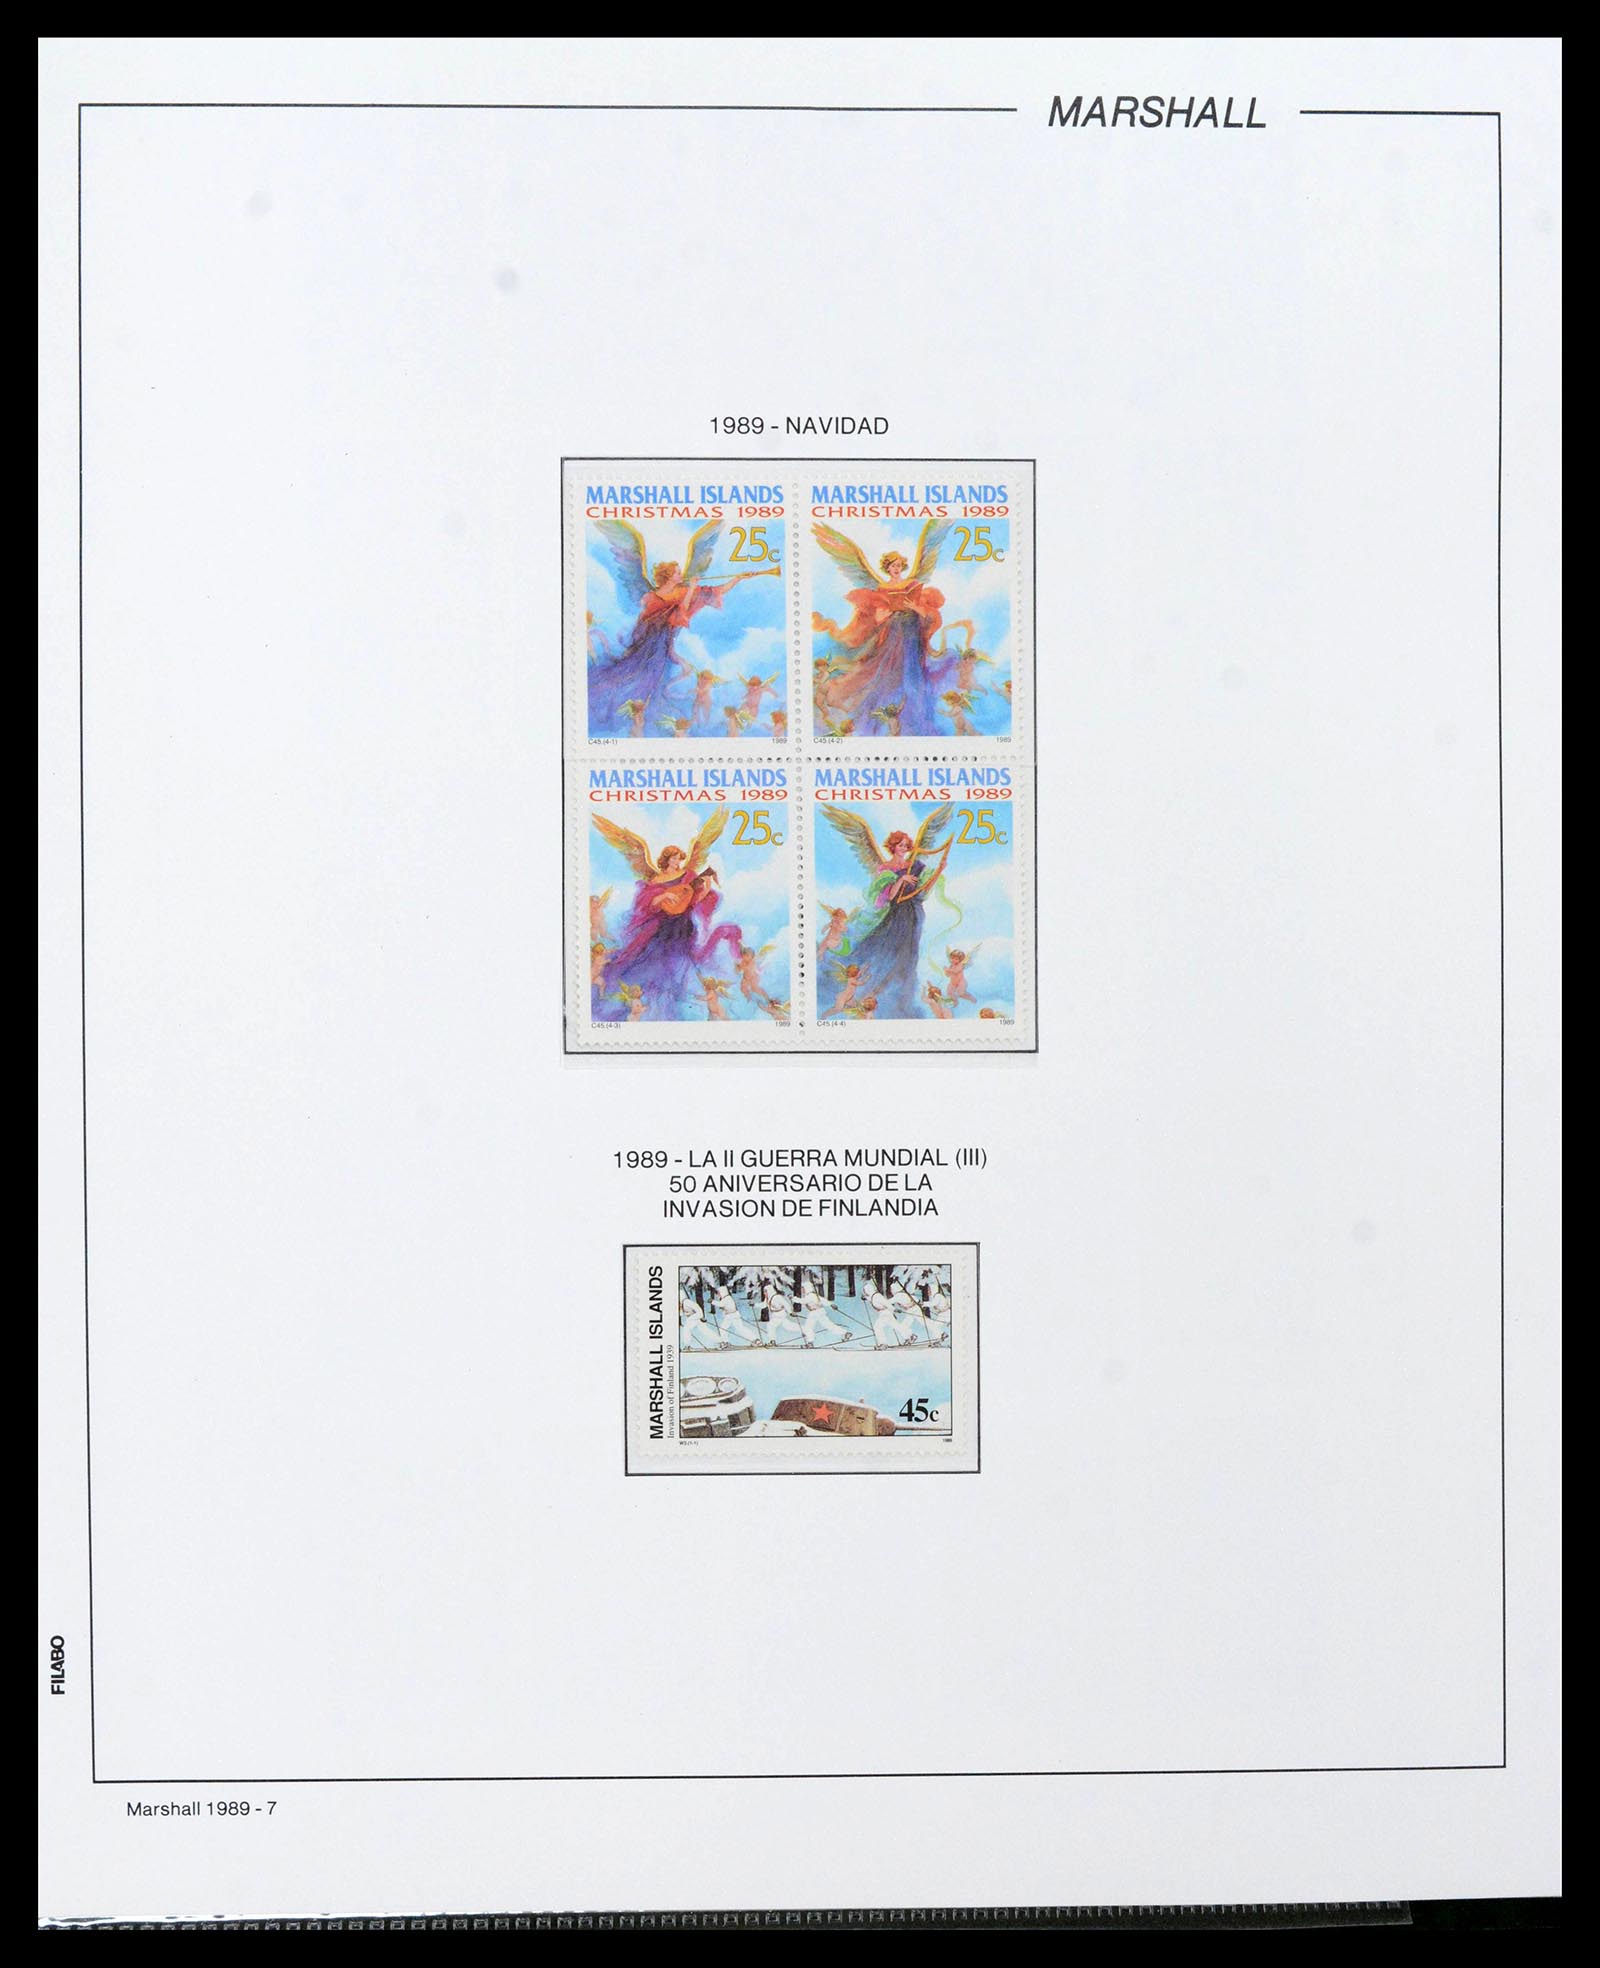 39222 0141 - Stamp collection 39222 Palau, Micronesia and Marshall islands 1980-1995.